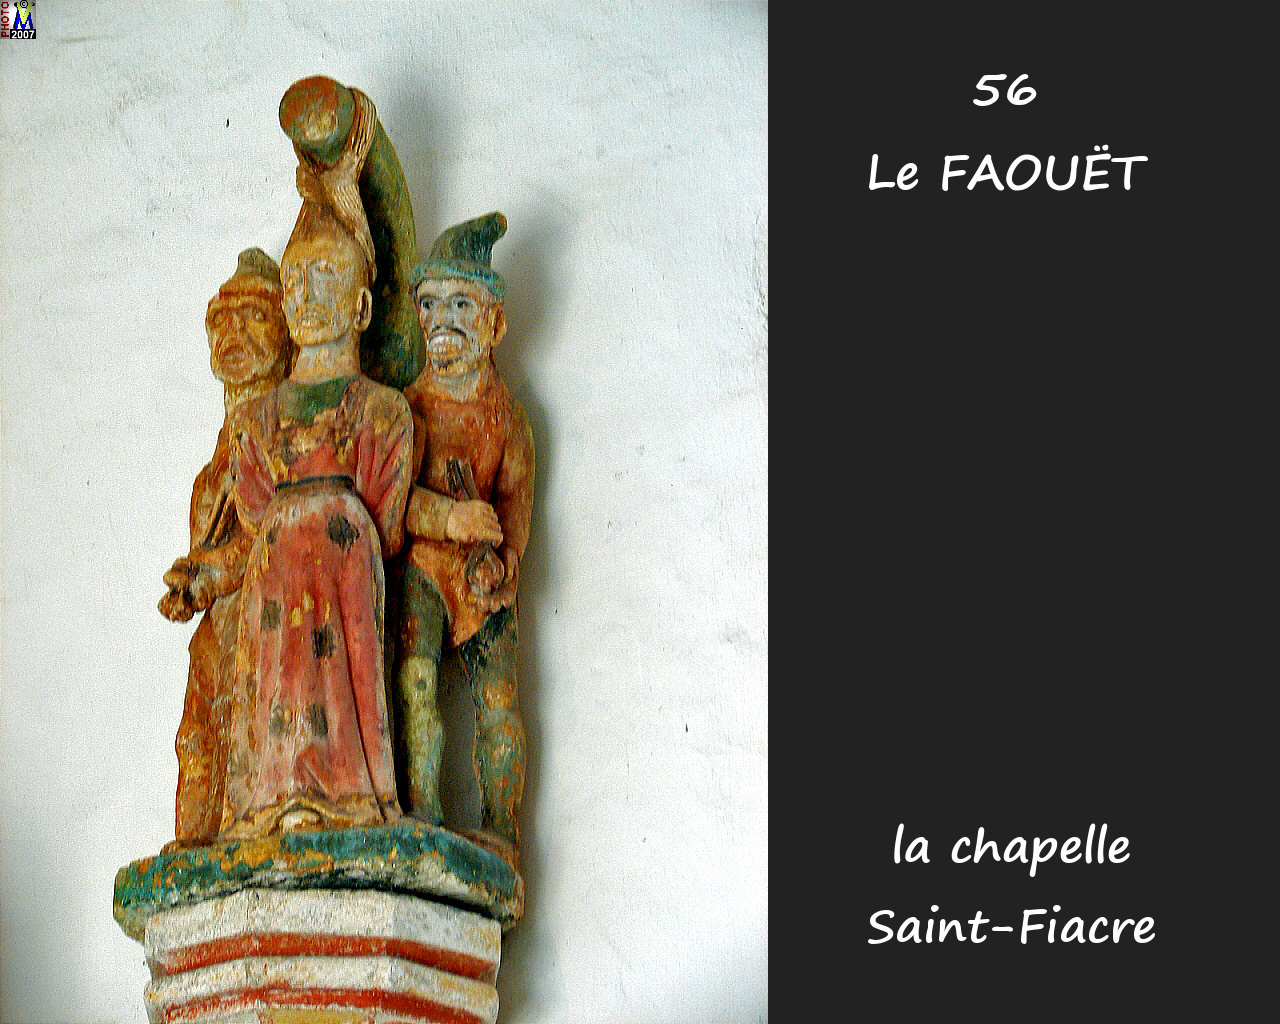 56FAOUET_chapelle-fiacre_326.jpg